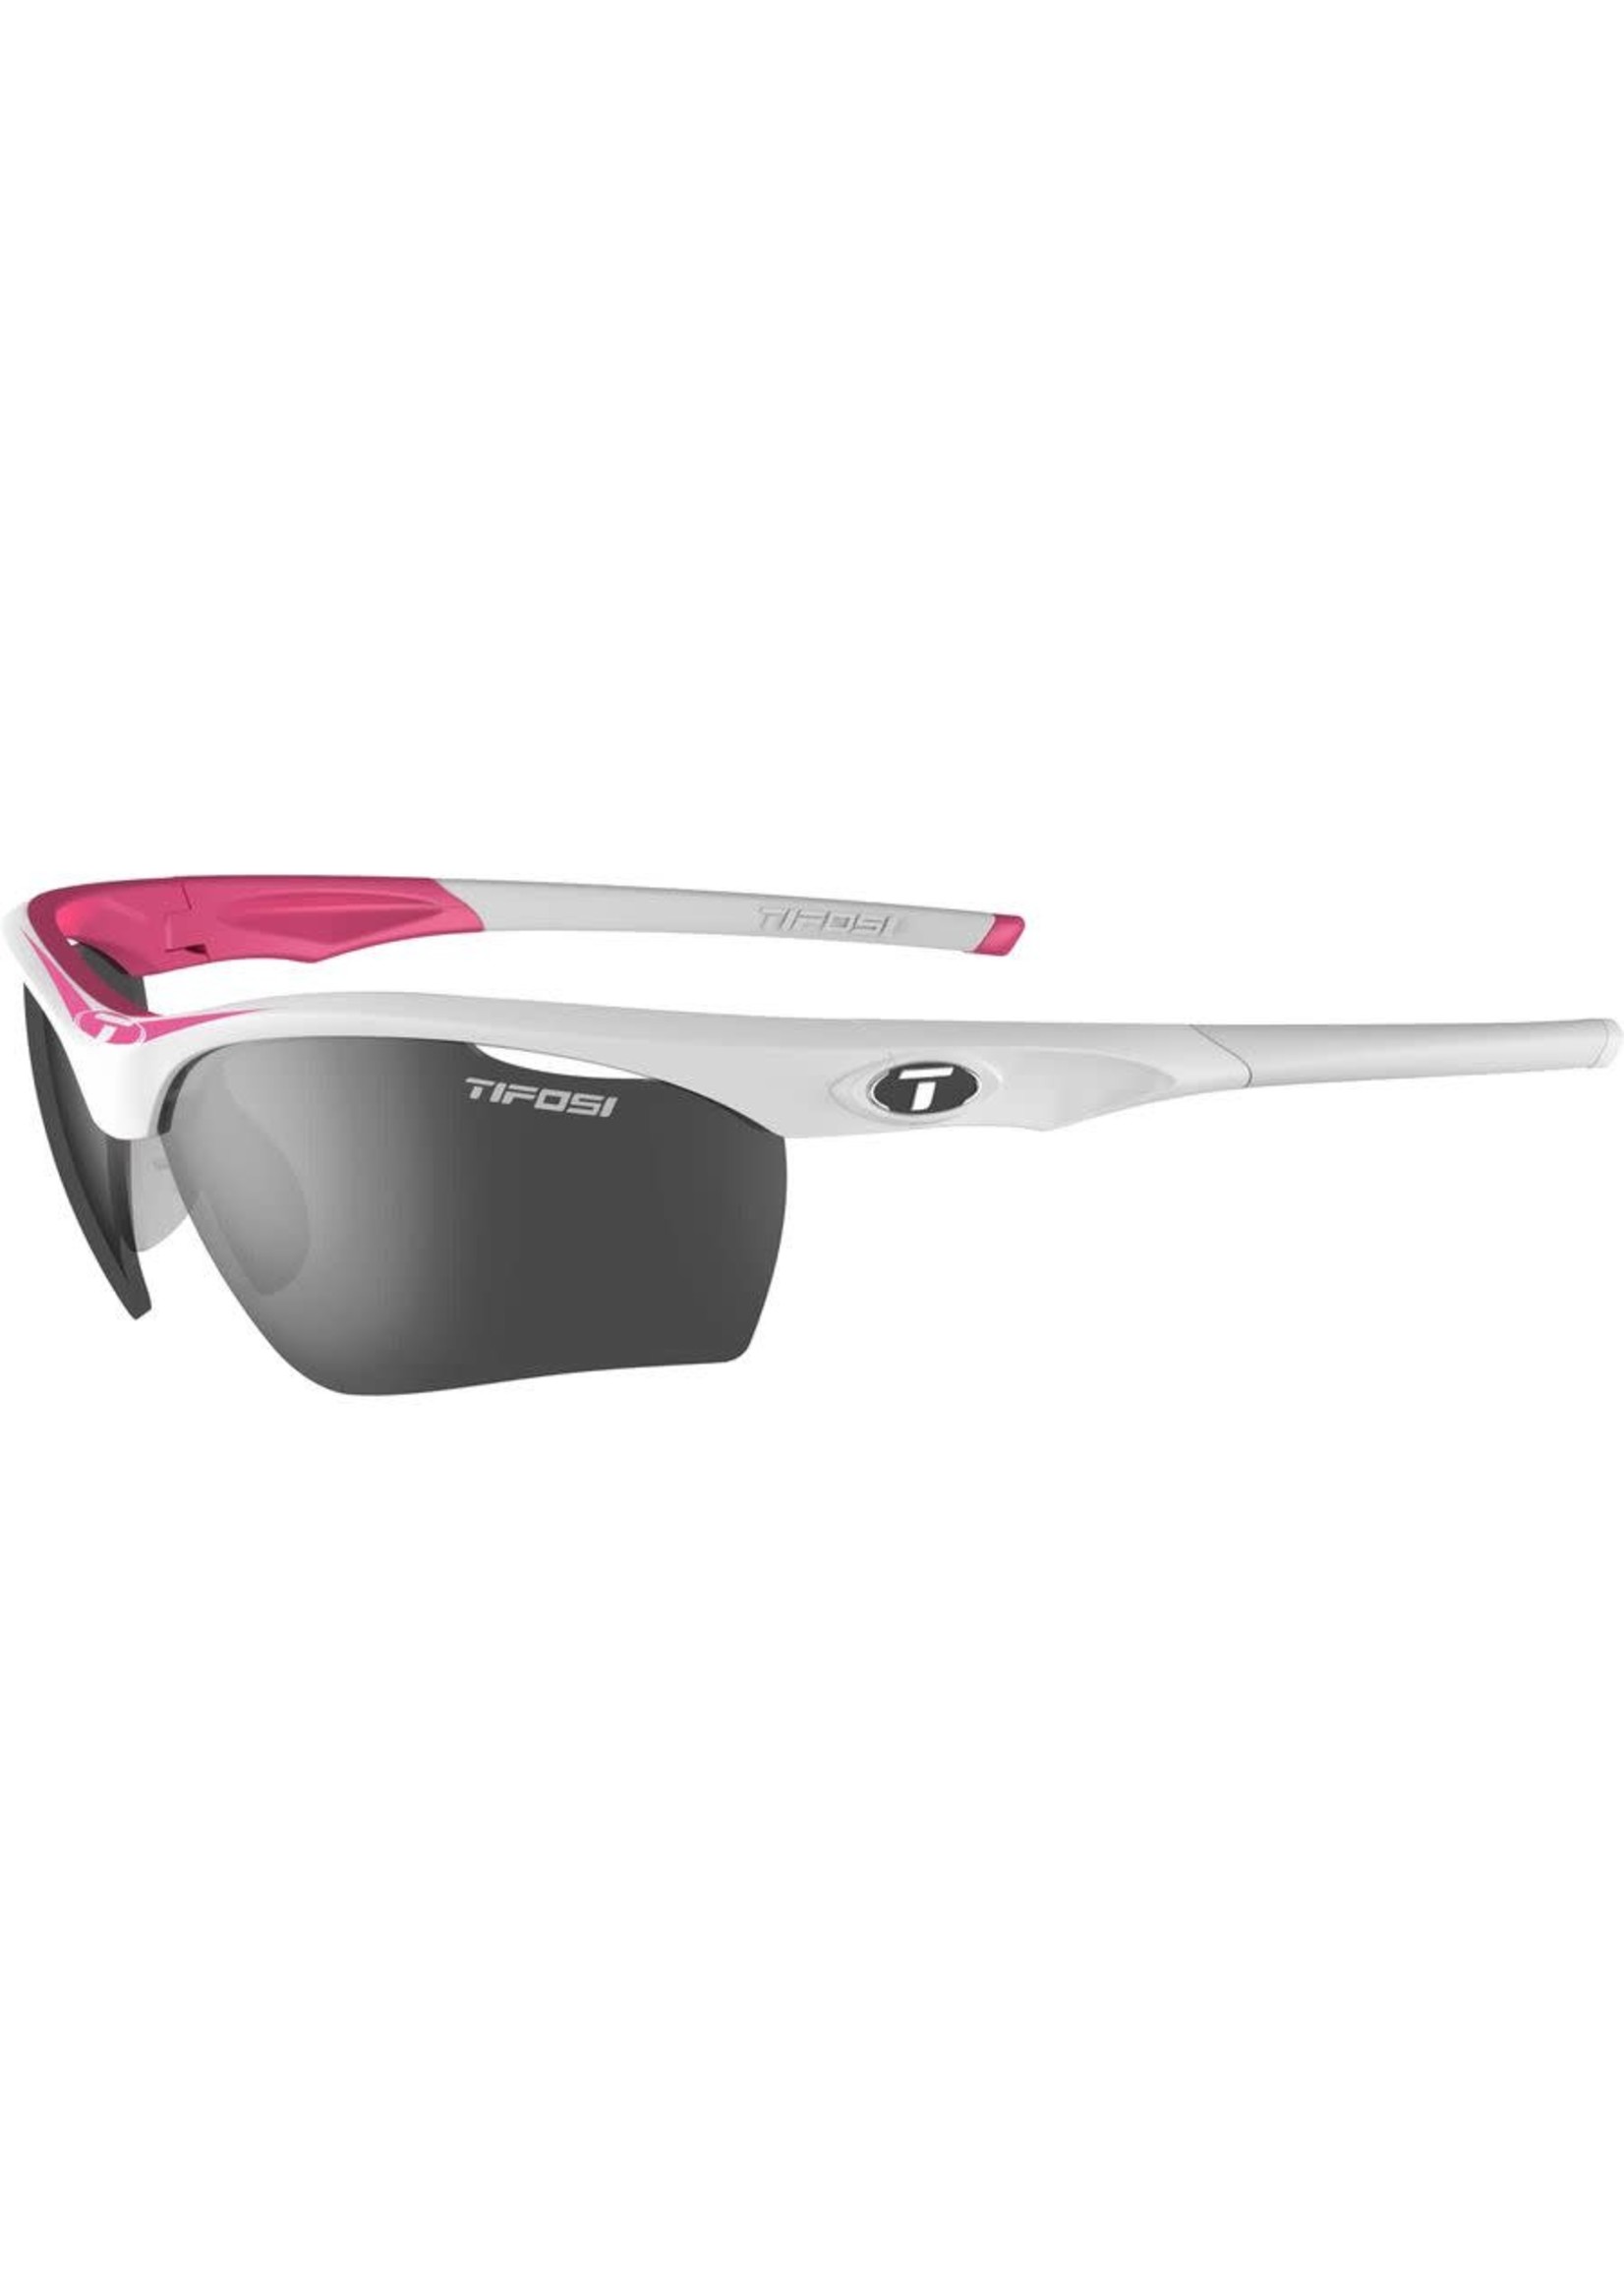 Tifosi Optics Wisp, Race Pink Interchangeable Sunglasses - Smoke/AC Red/Clear Lenses